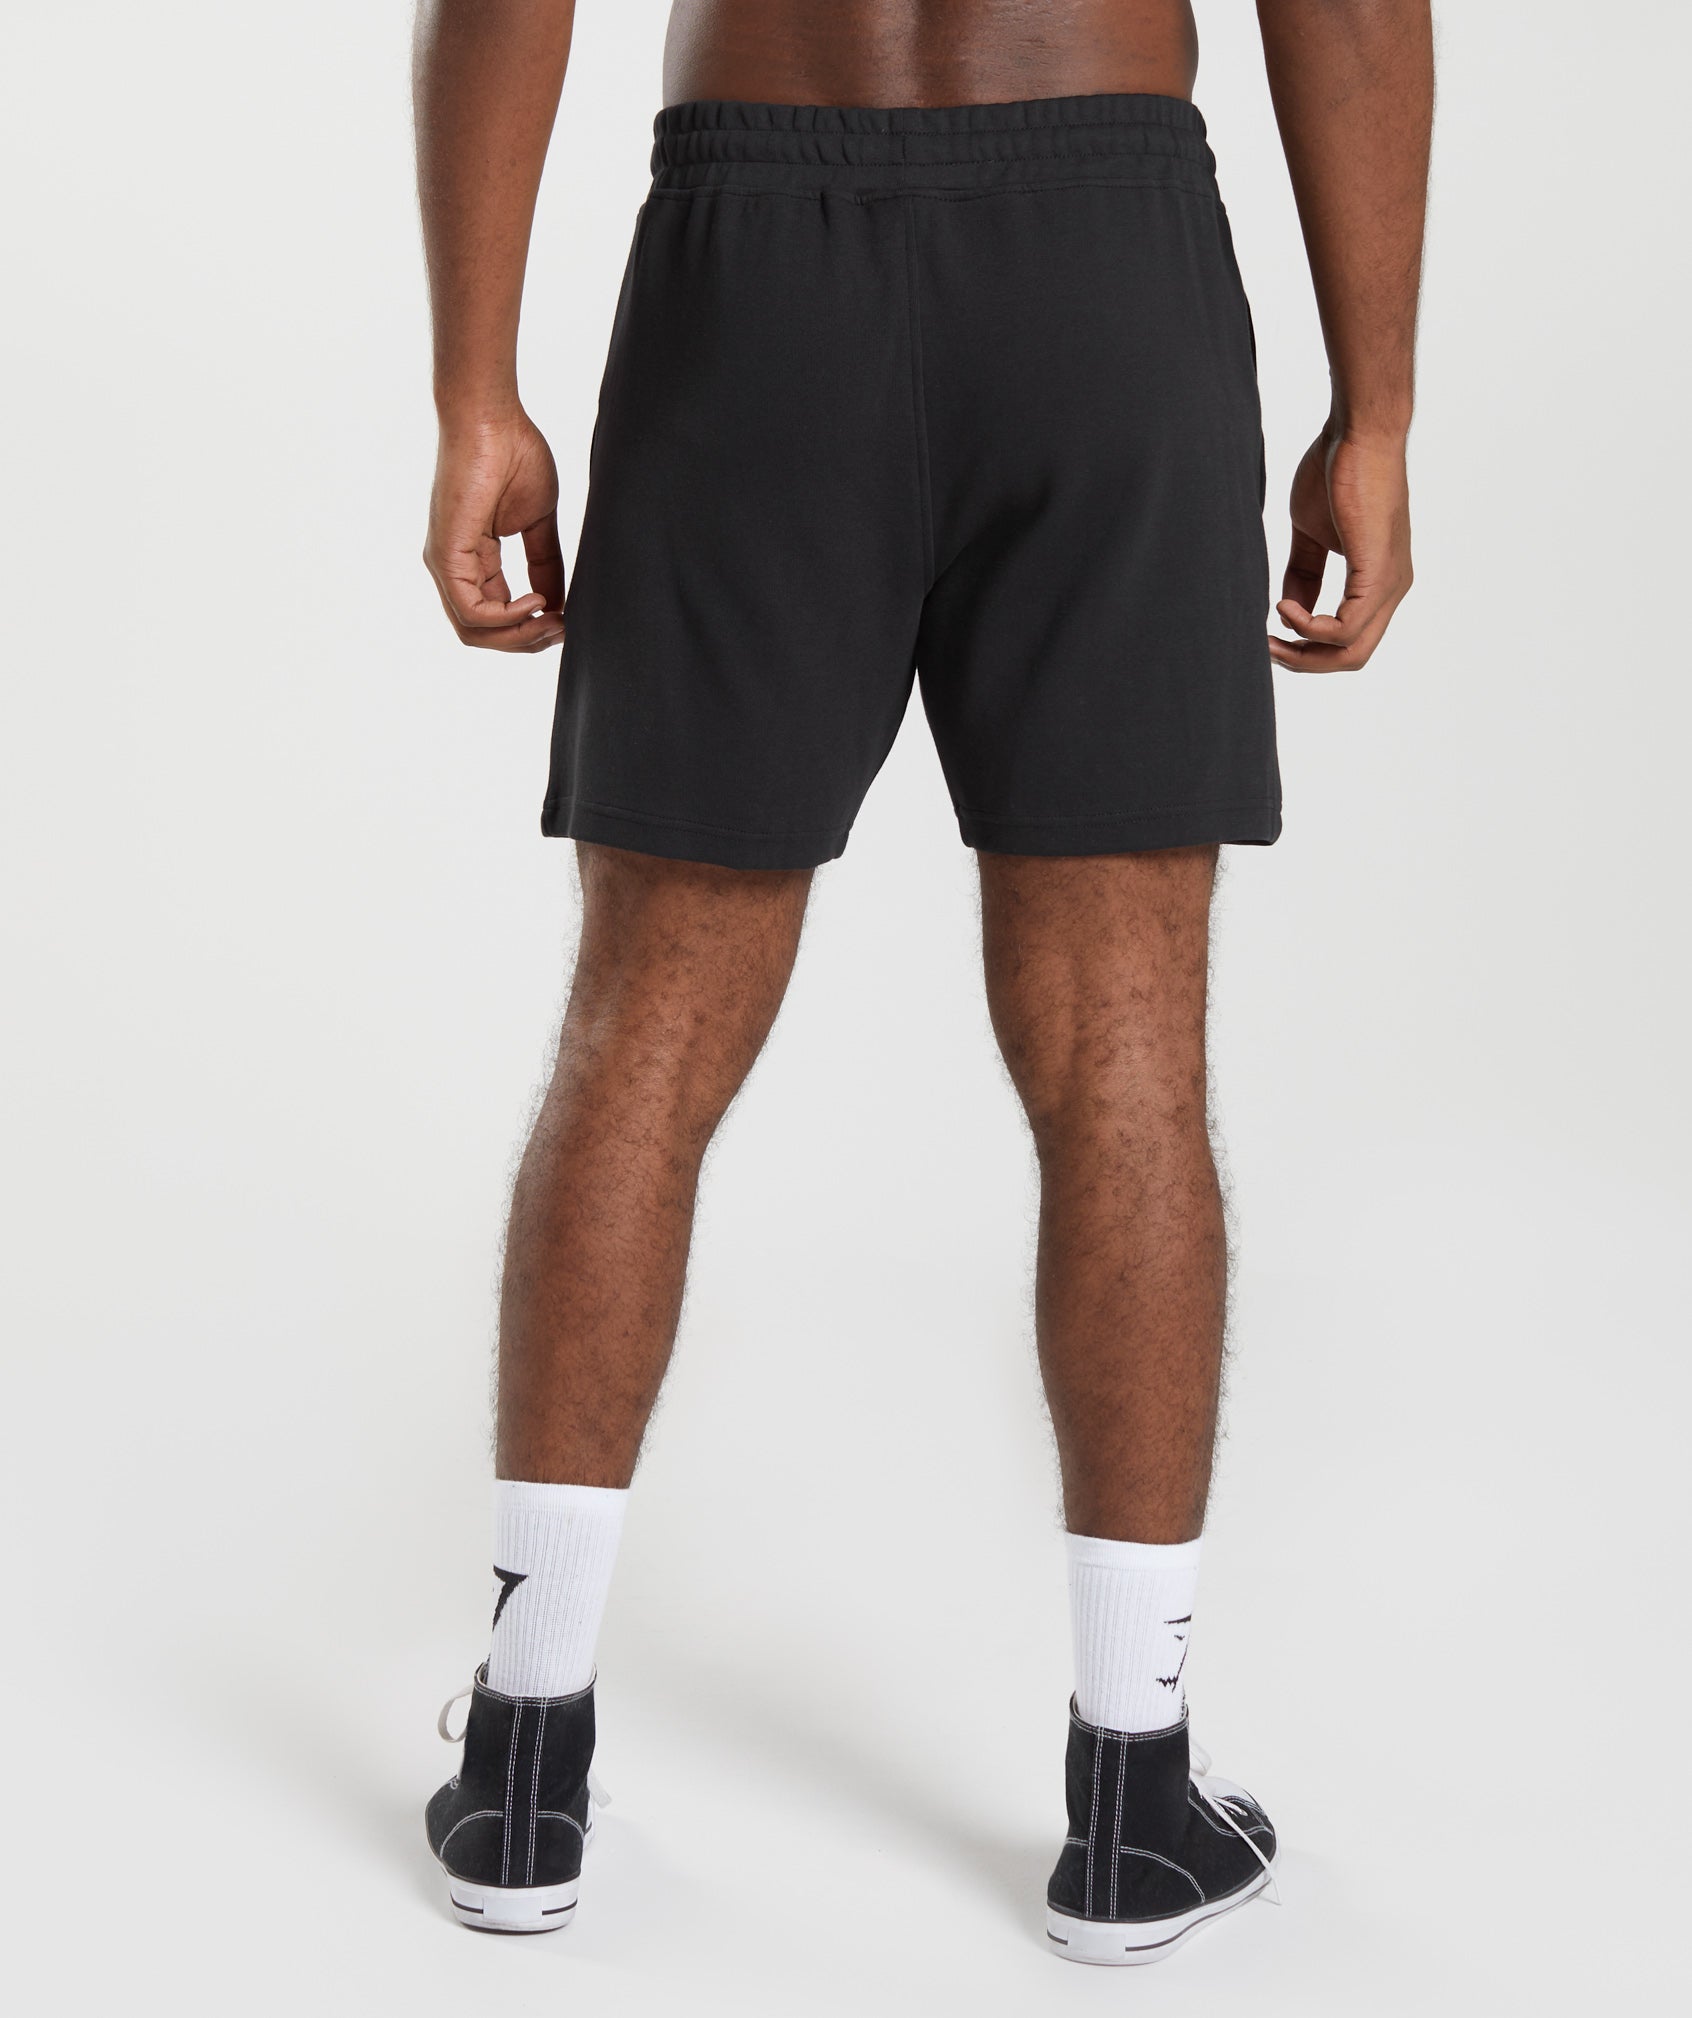 React 7" Shorts in Black